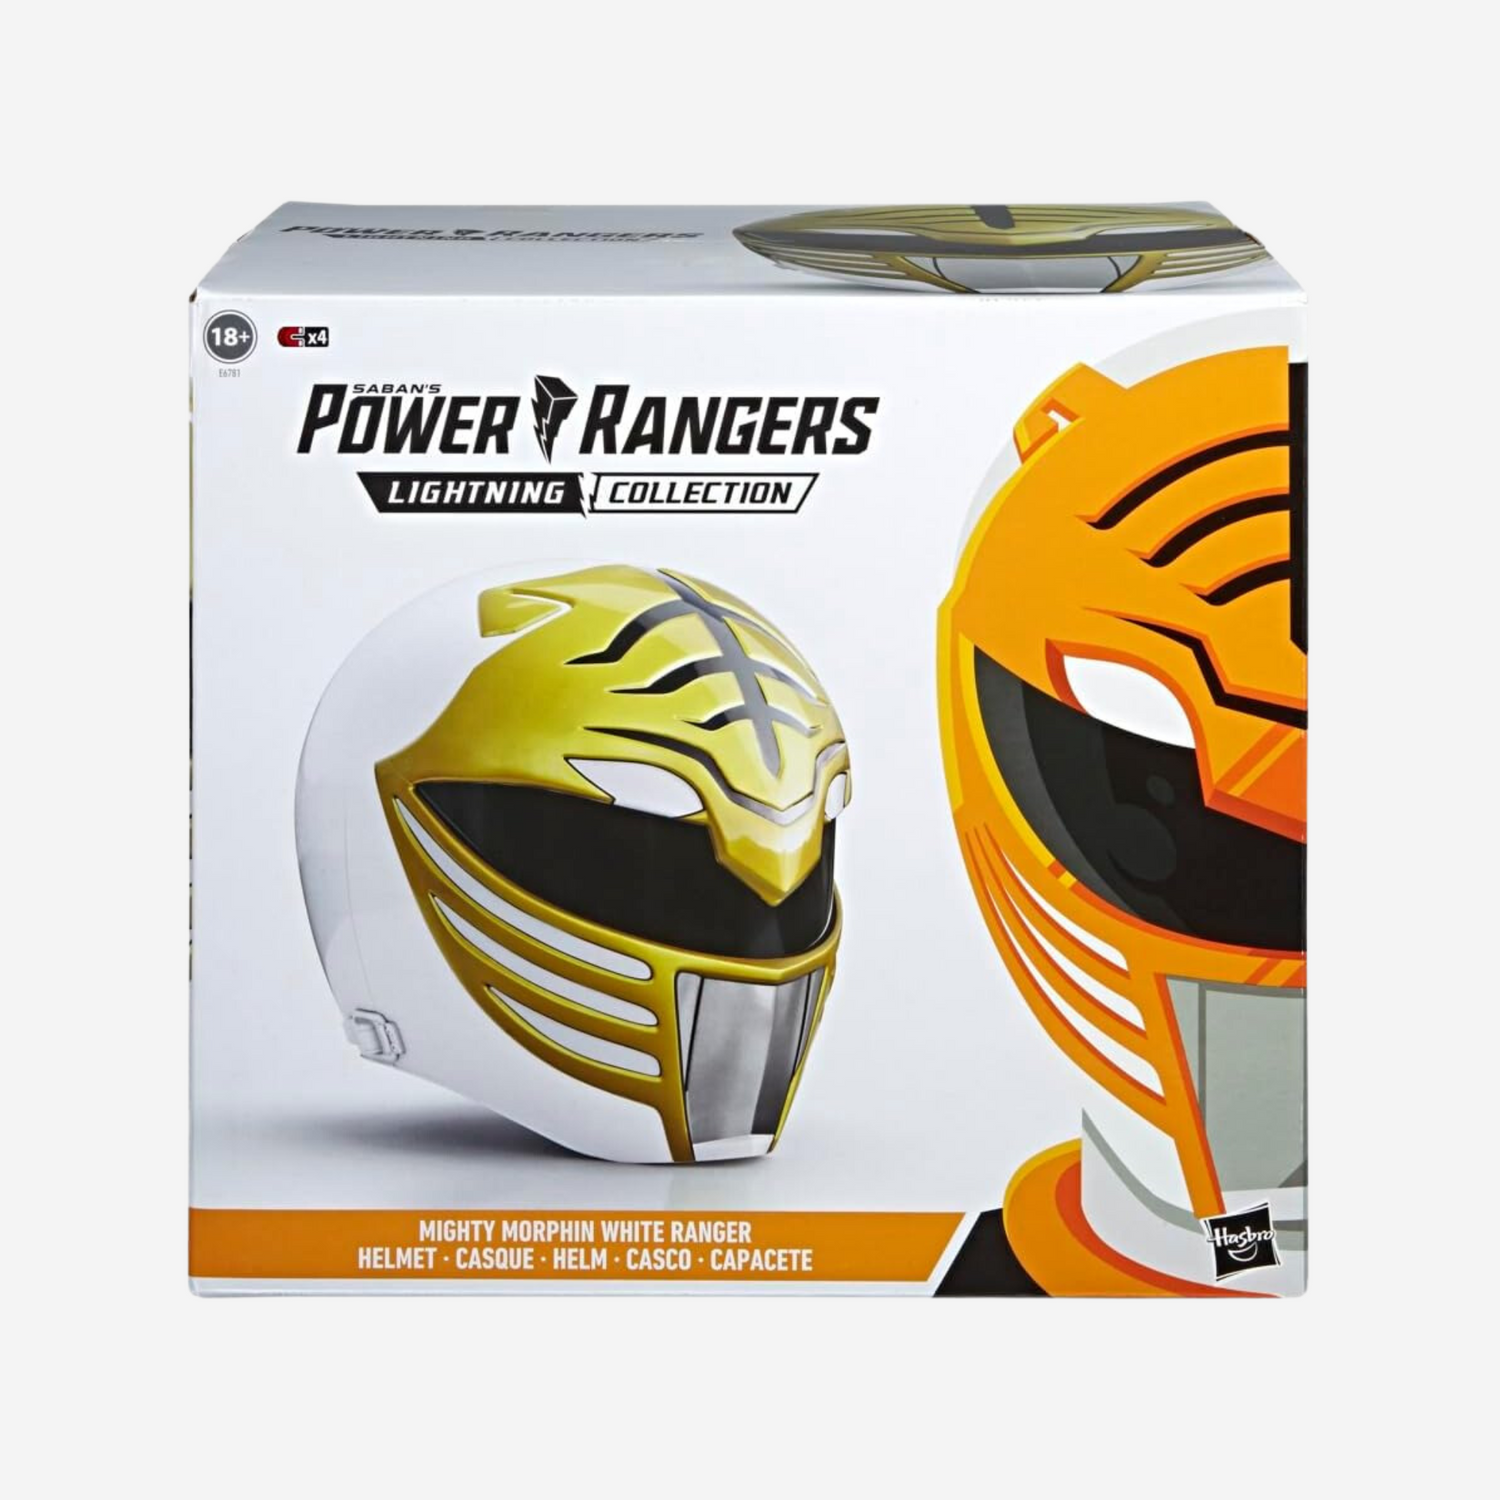 Power Rangers Lightning Collection Mighty Morphin White Ranger Premium